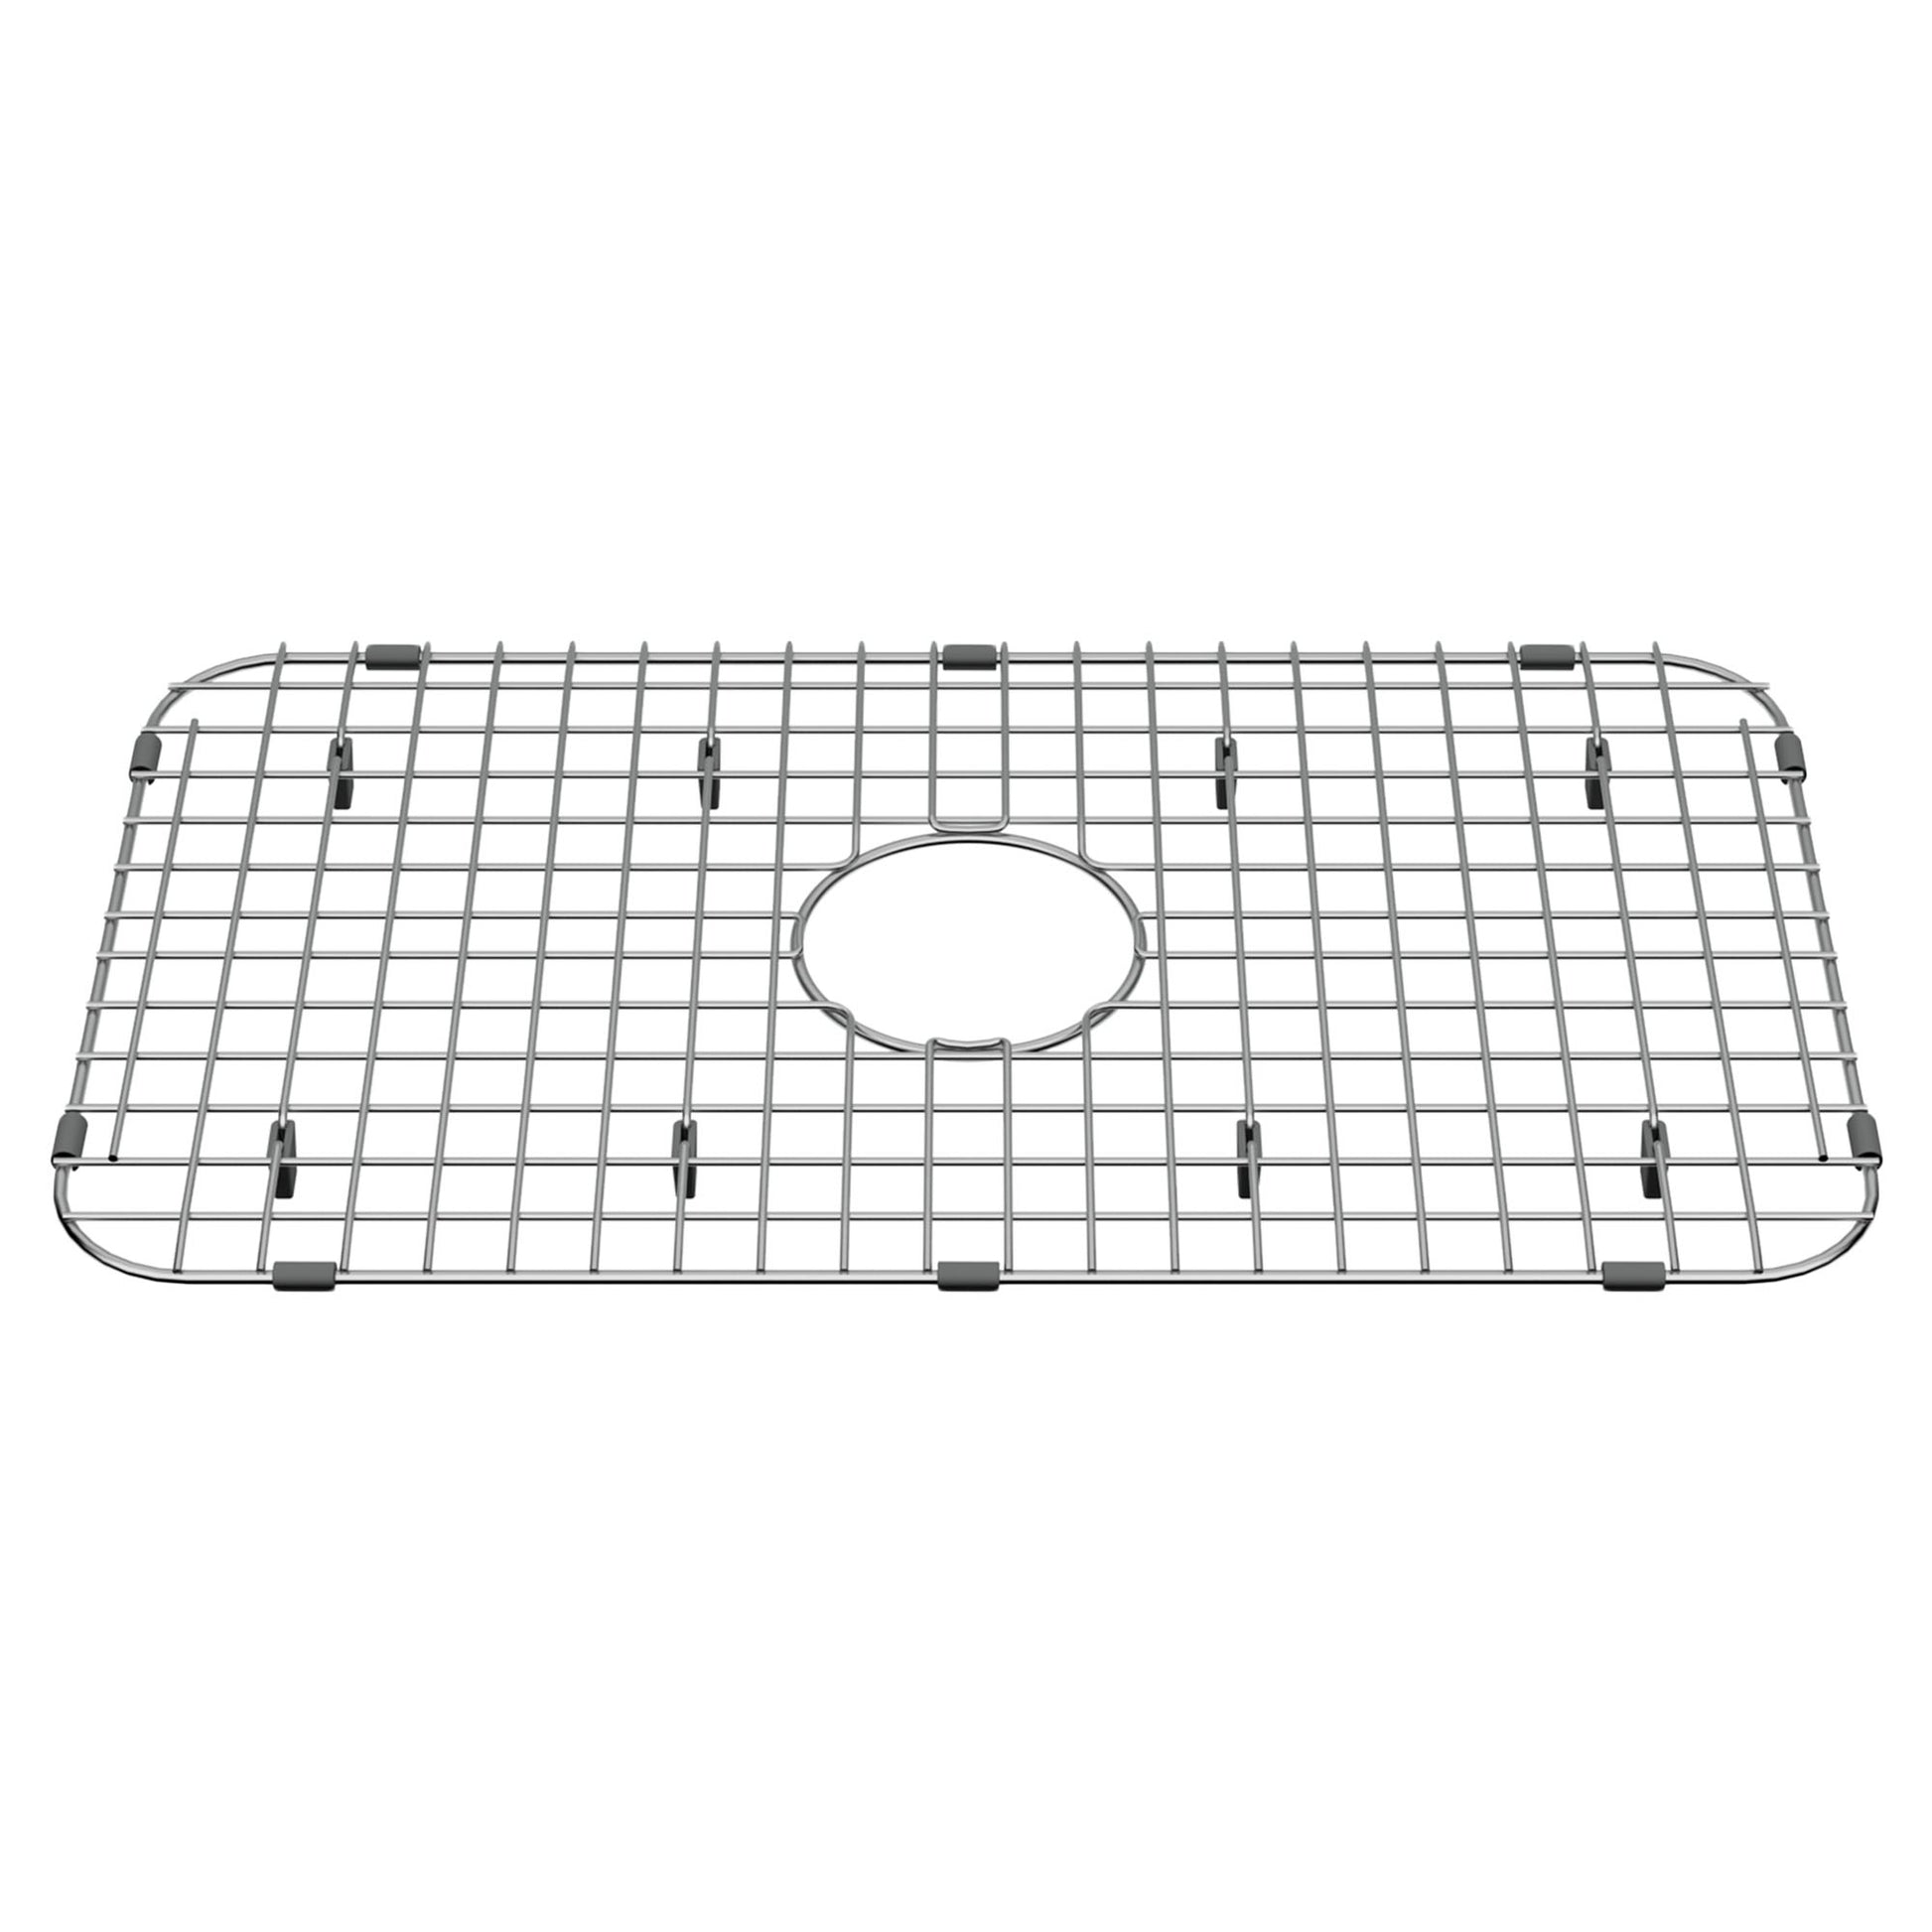 AMERICAN-STANDARD 8432000.075, Delancey 30-Inch Single Bowl Kitchen Sink Grid in Stainless Stl